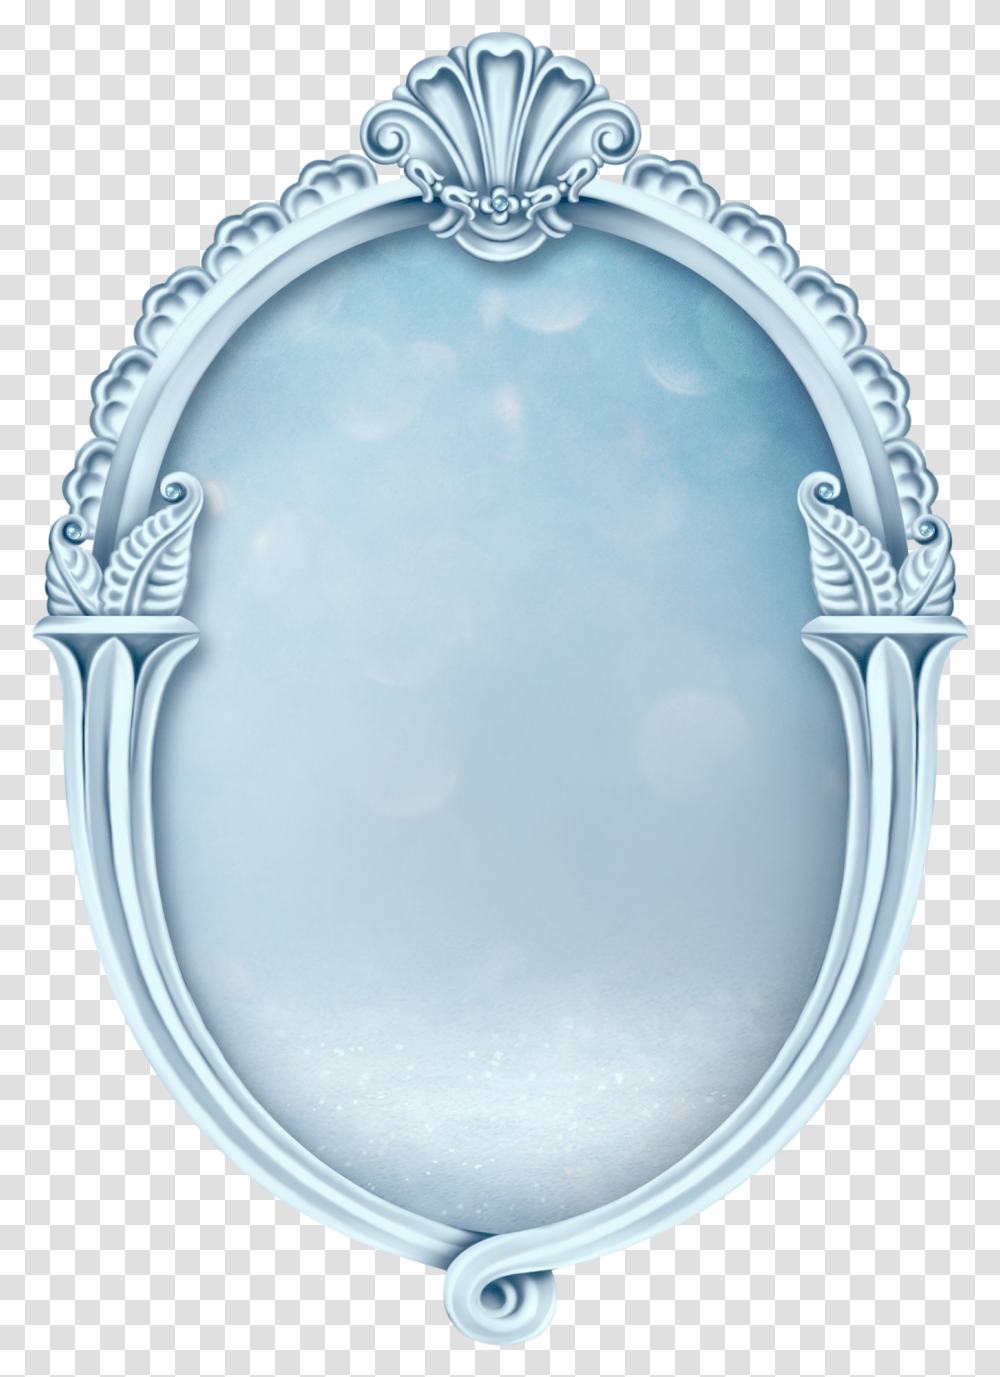 Door Knocker Clipart Moonbeam Frosted Dreams, Mirror, Bracelet, Jewelry, Accessories Transparent Png